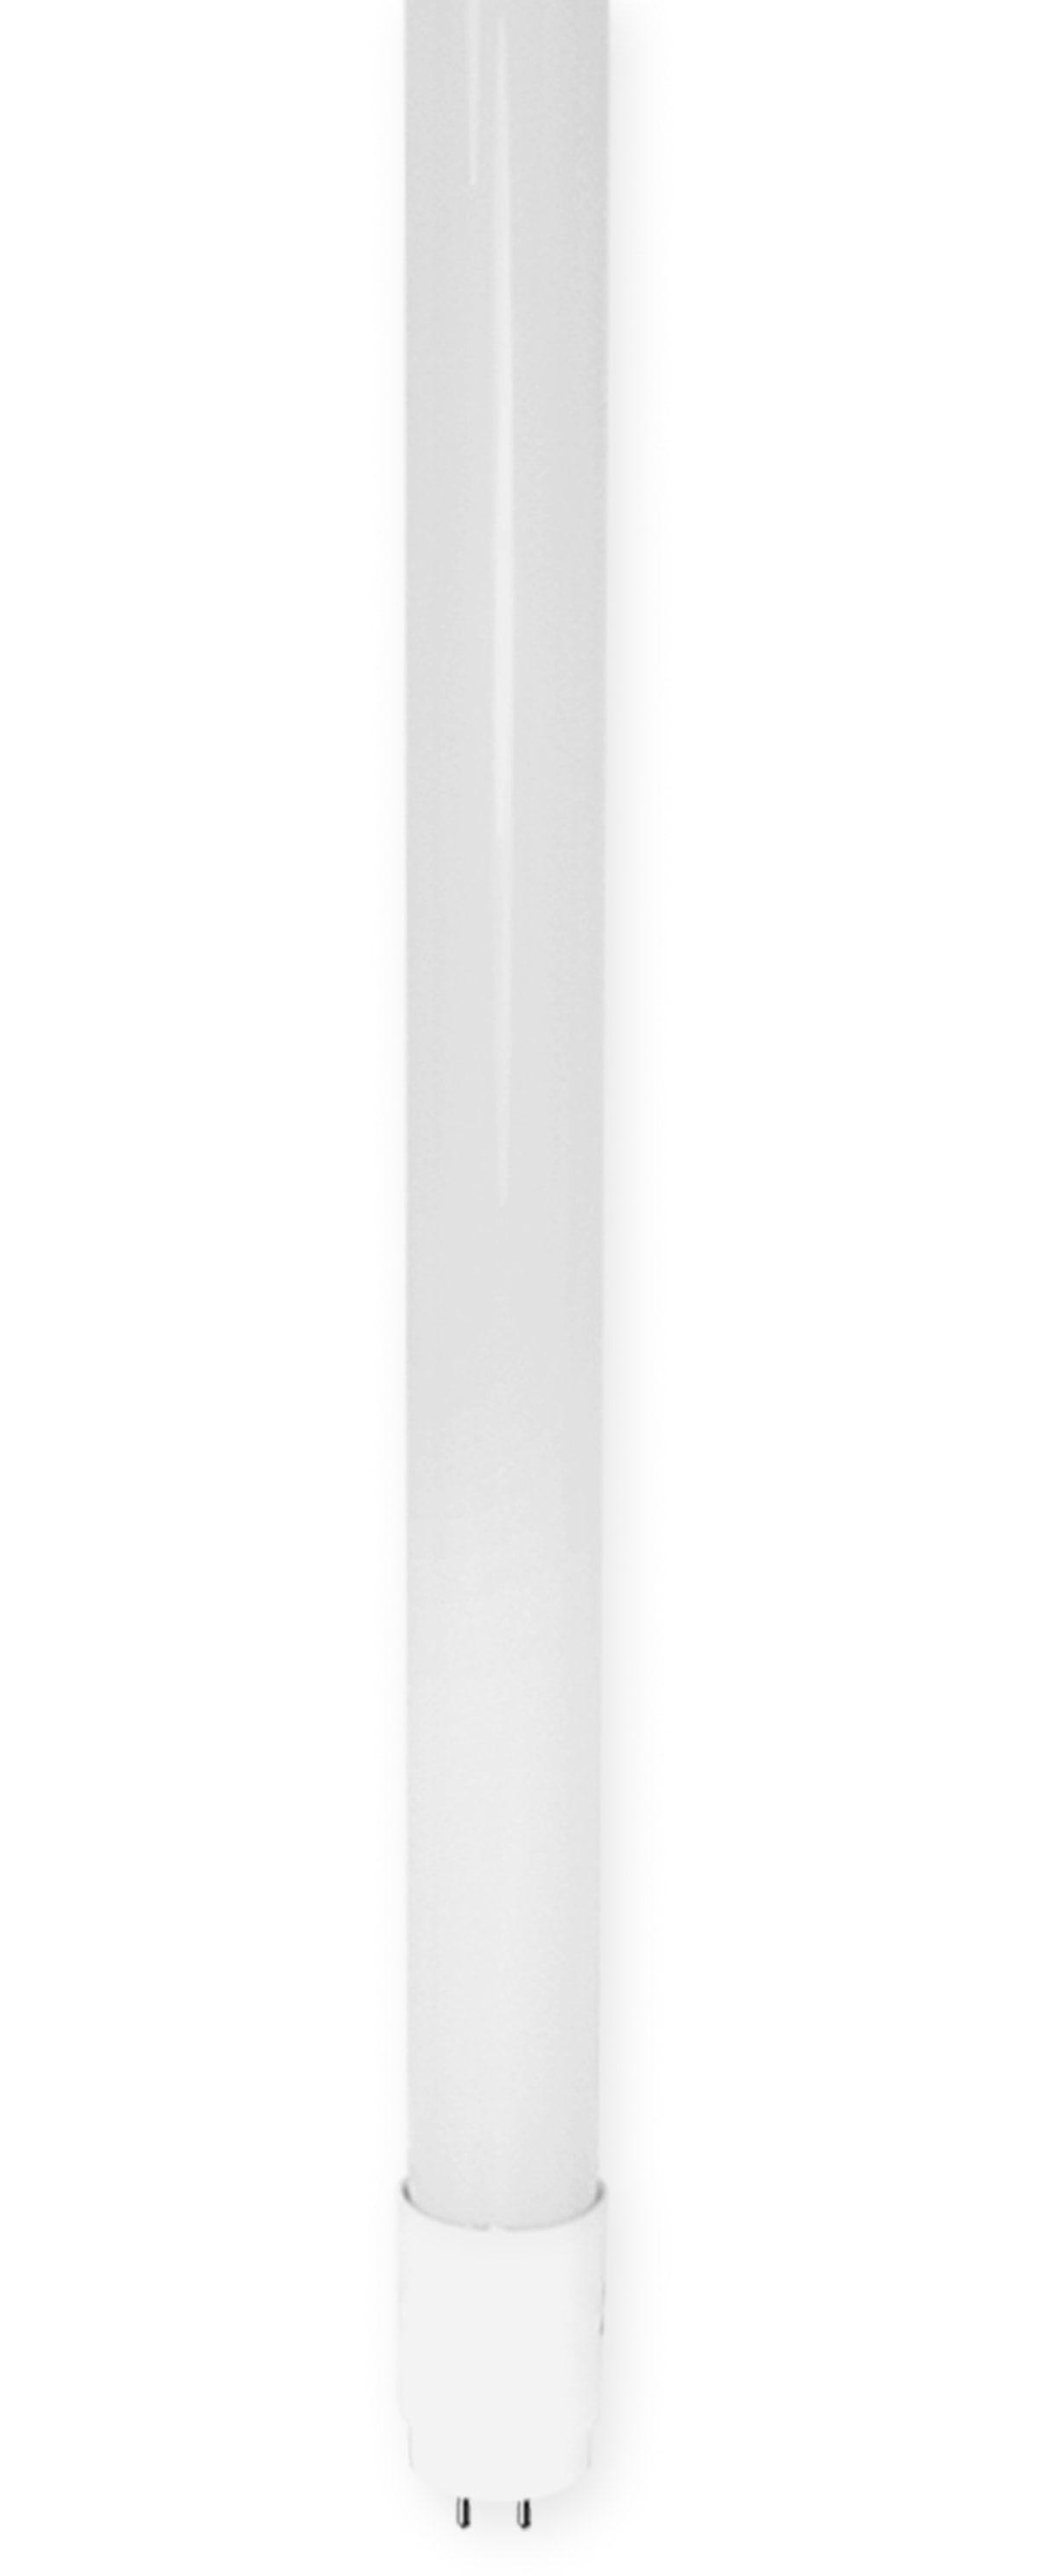 BLULAXA LED-Röhre 48742, EEK: F, 15 W, 1550 lm, G13, 4000 K, 90 cm